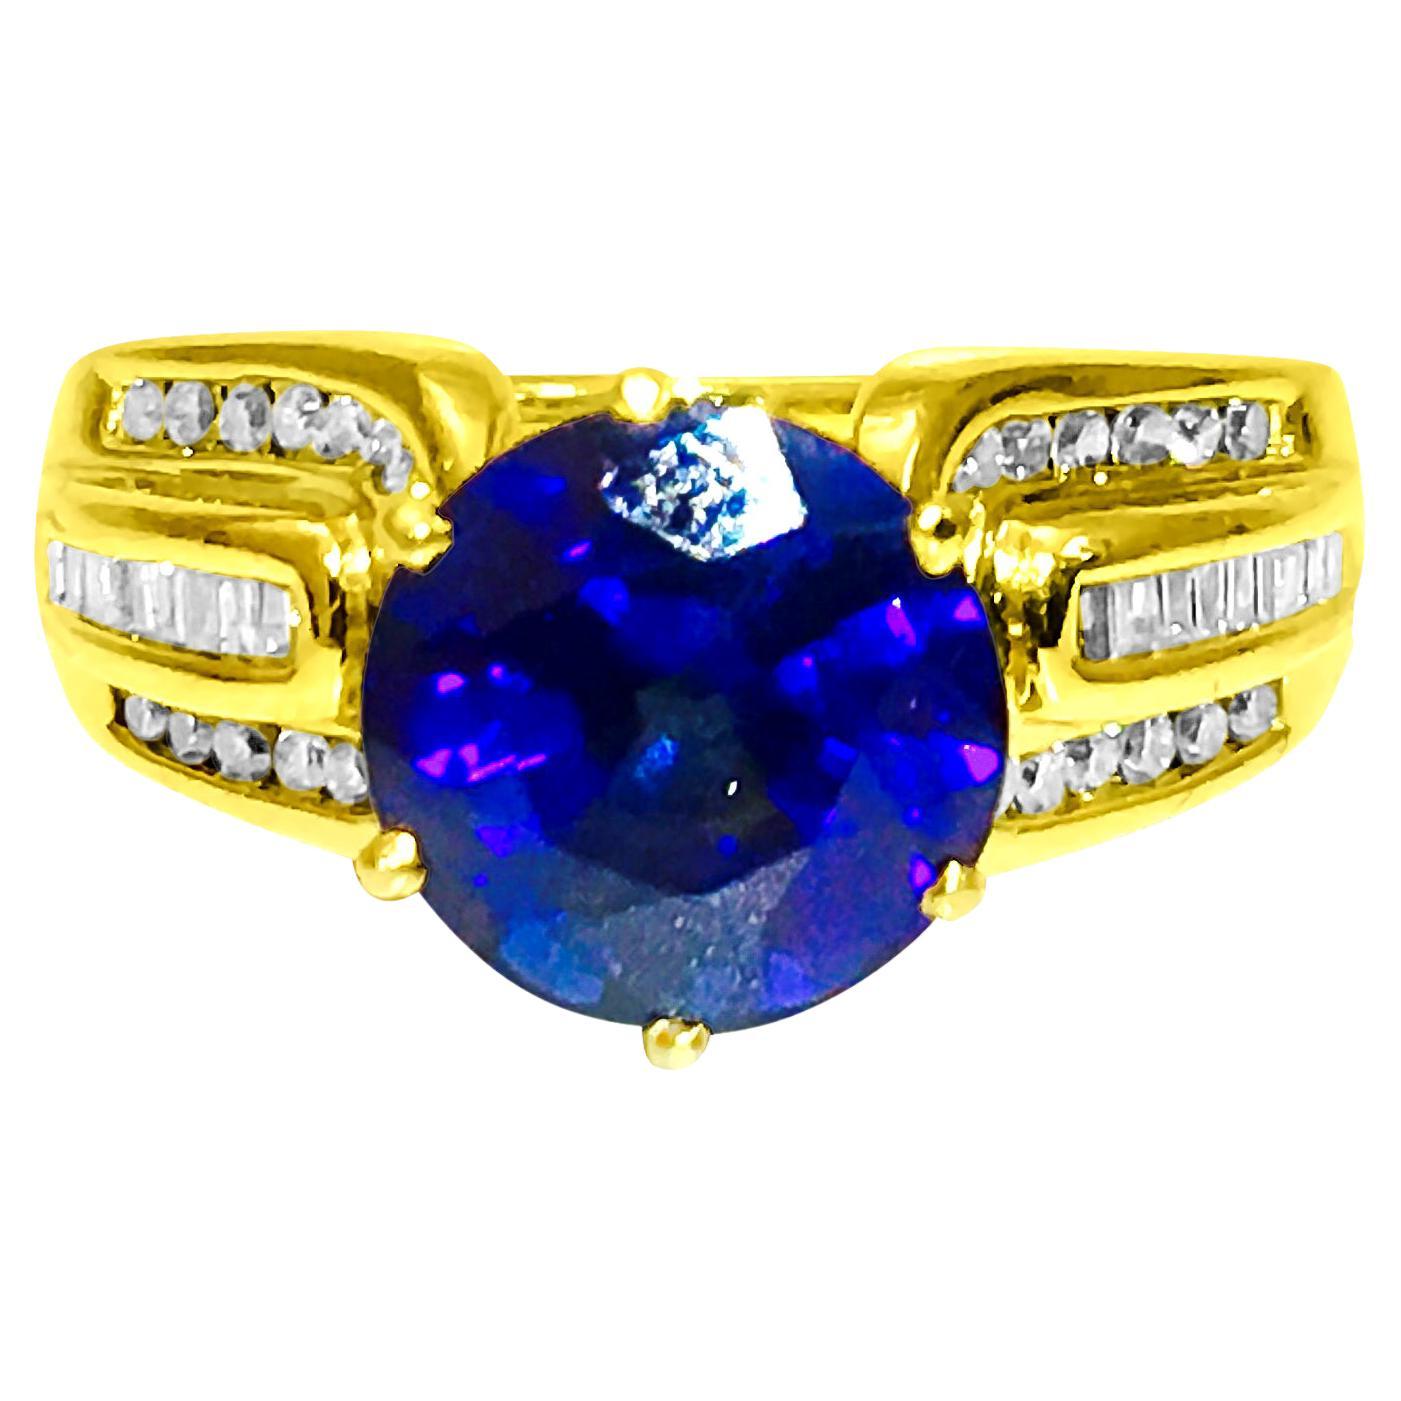 Vintage 7.00 Carat Natural Blue Sapphire Diamond Cocktail Ring